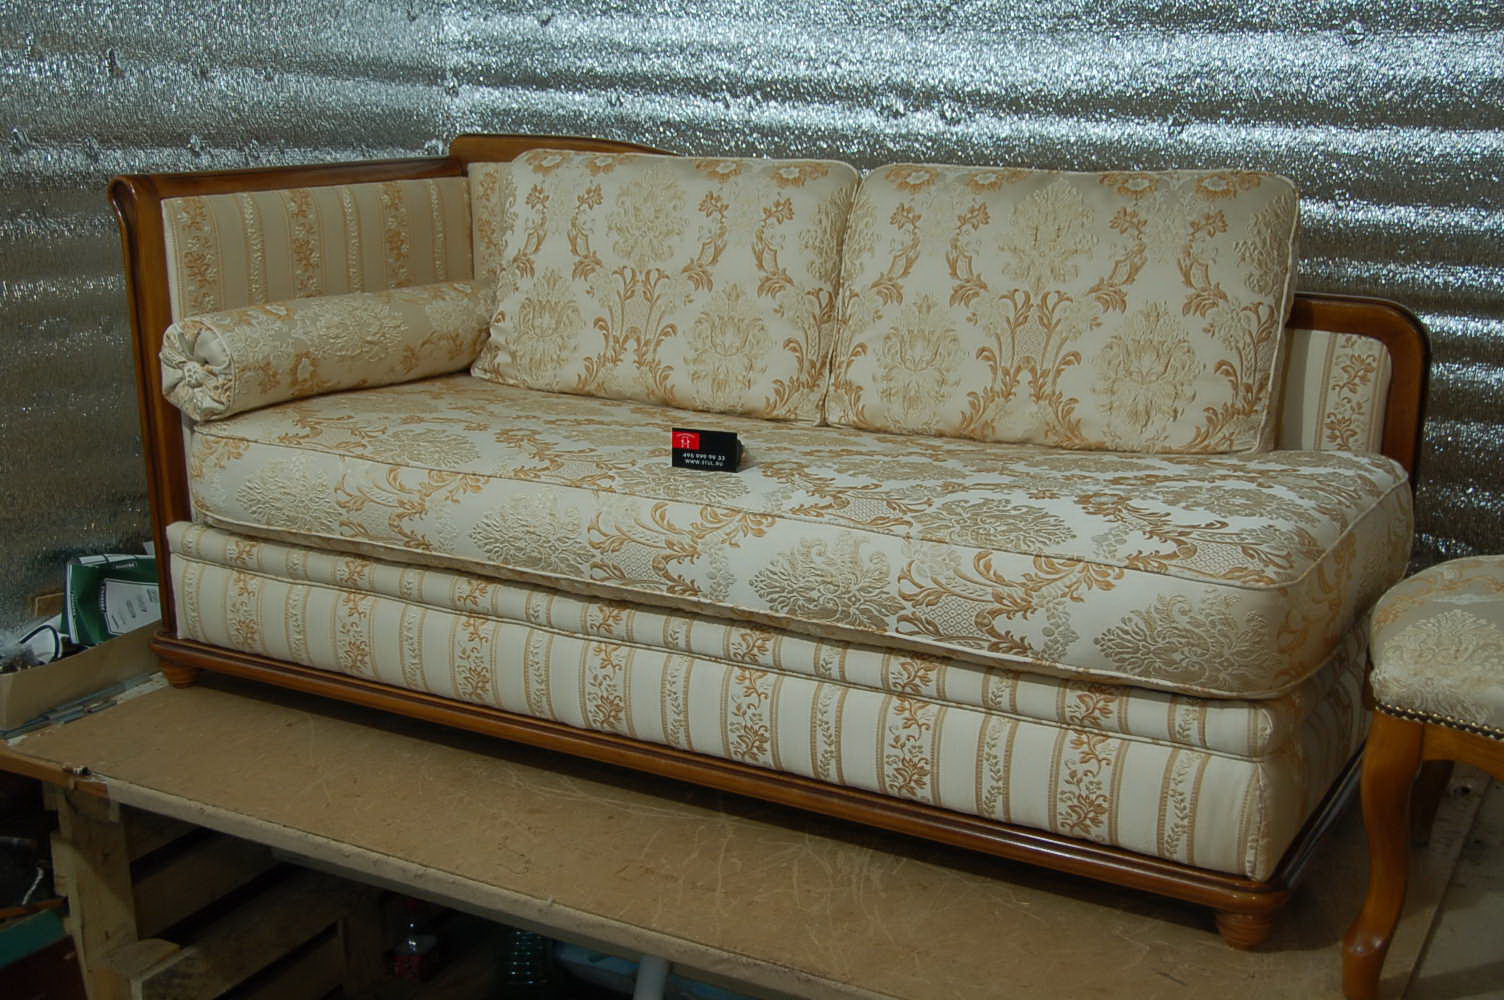 Перетянуть старый диван